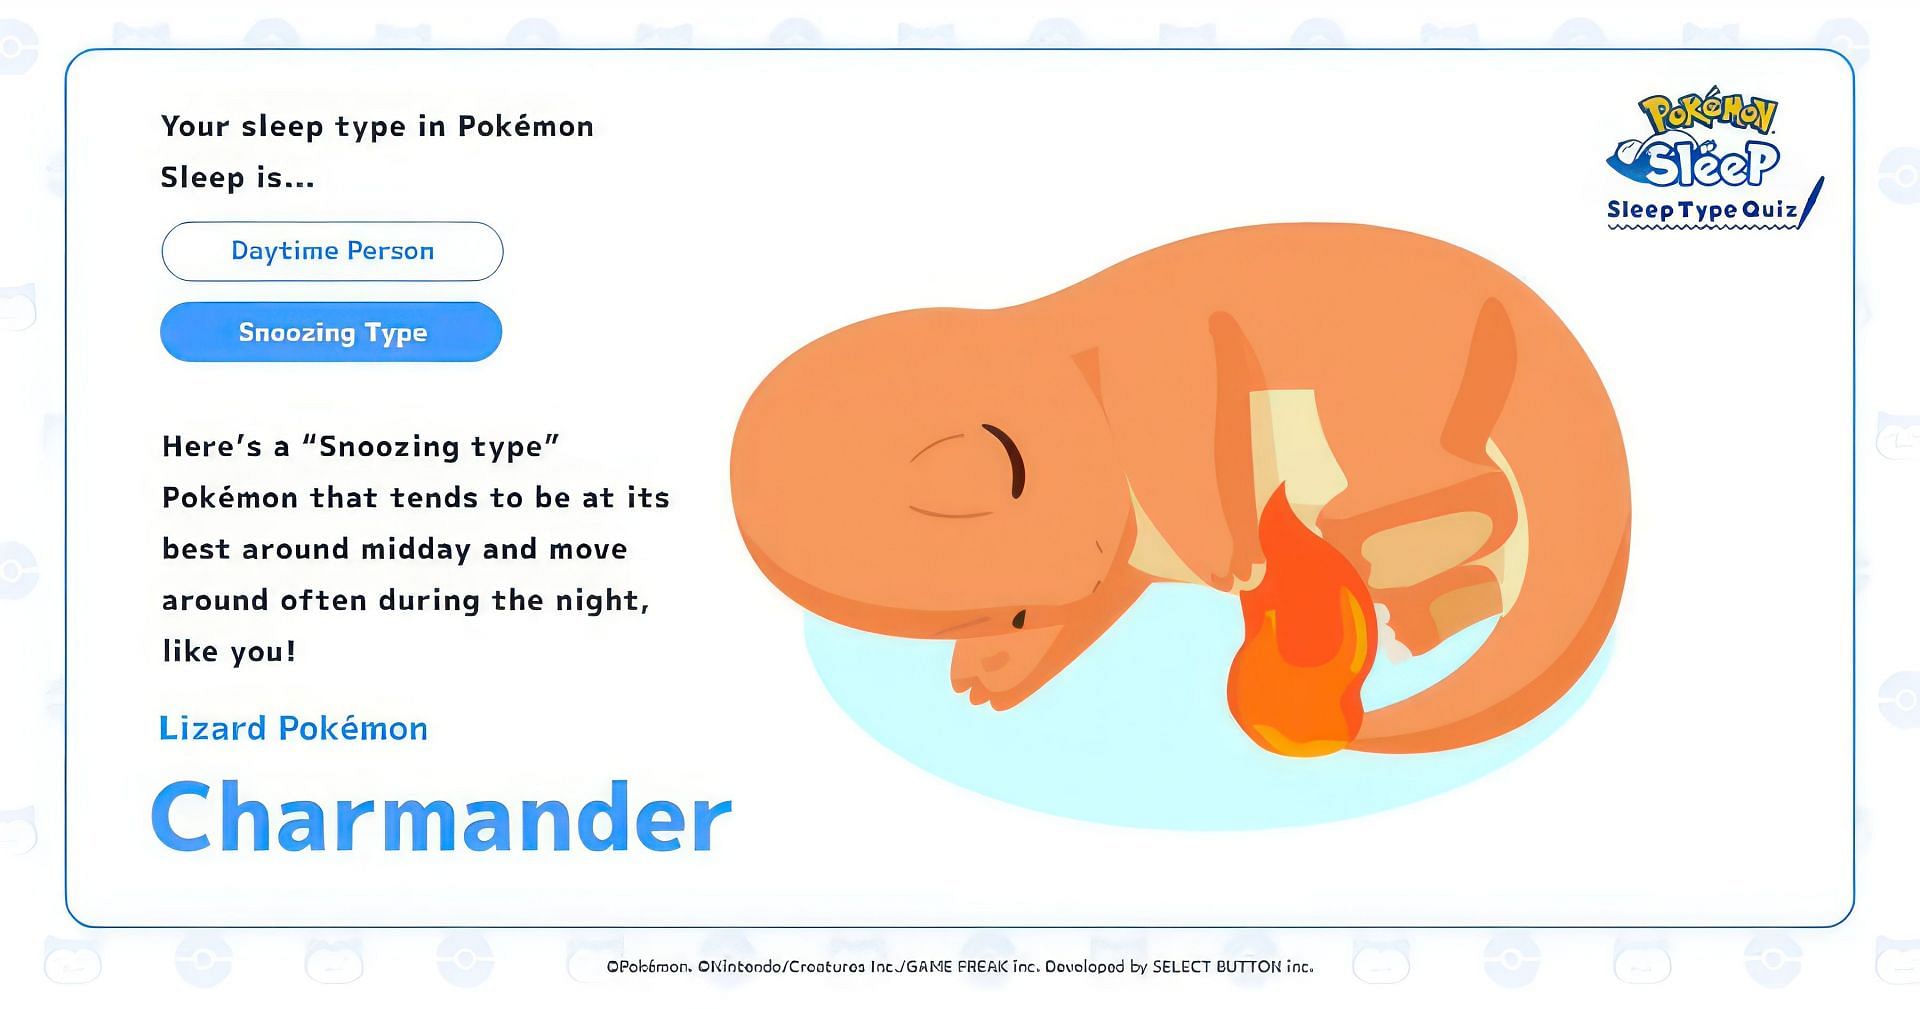 Moderate sleep decribes Snoozing sleep type in the game (Image via The Pokemon Company)